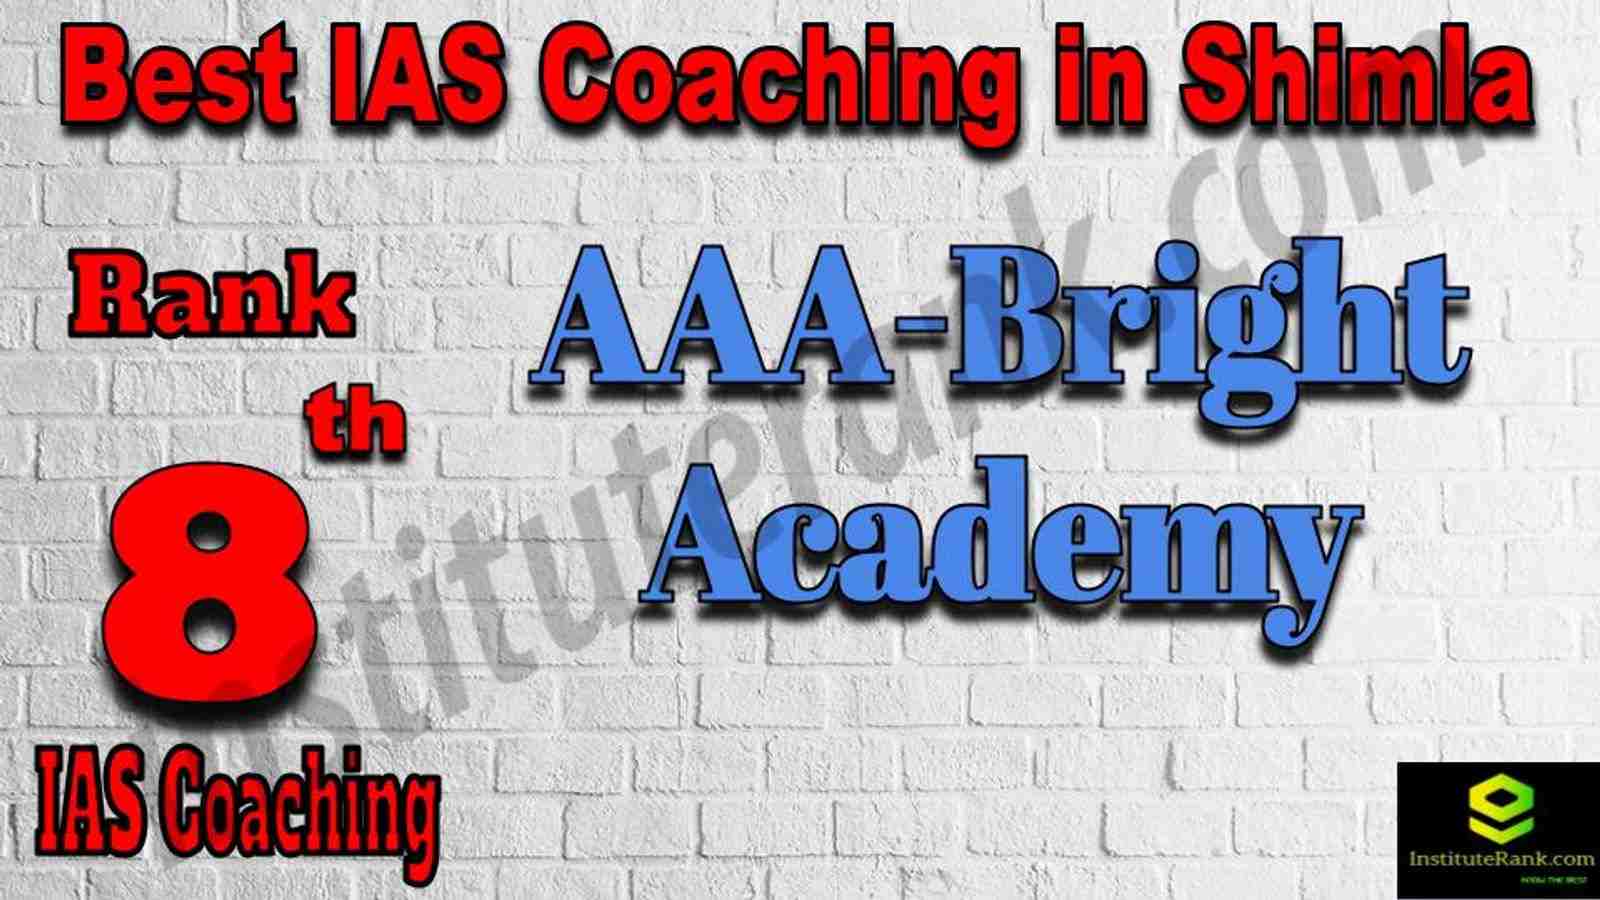 8th Best IAS Coaching in Shimla